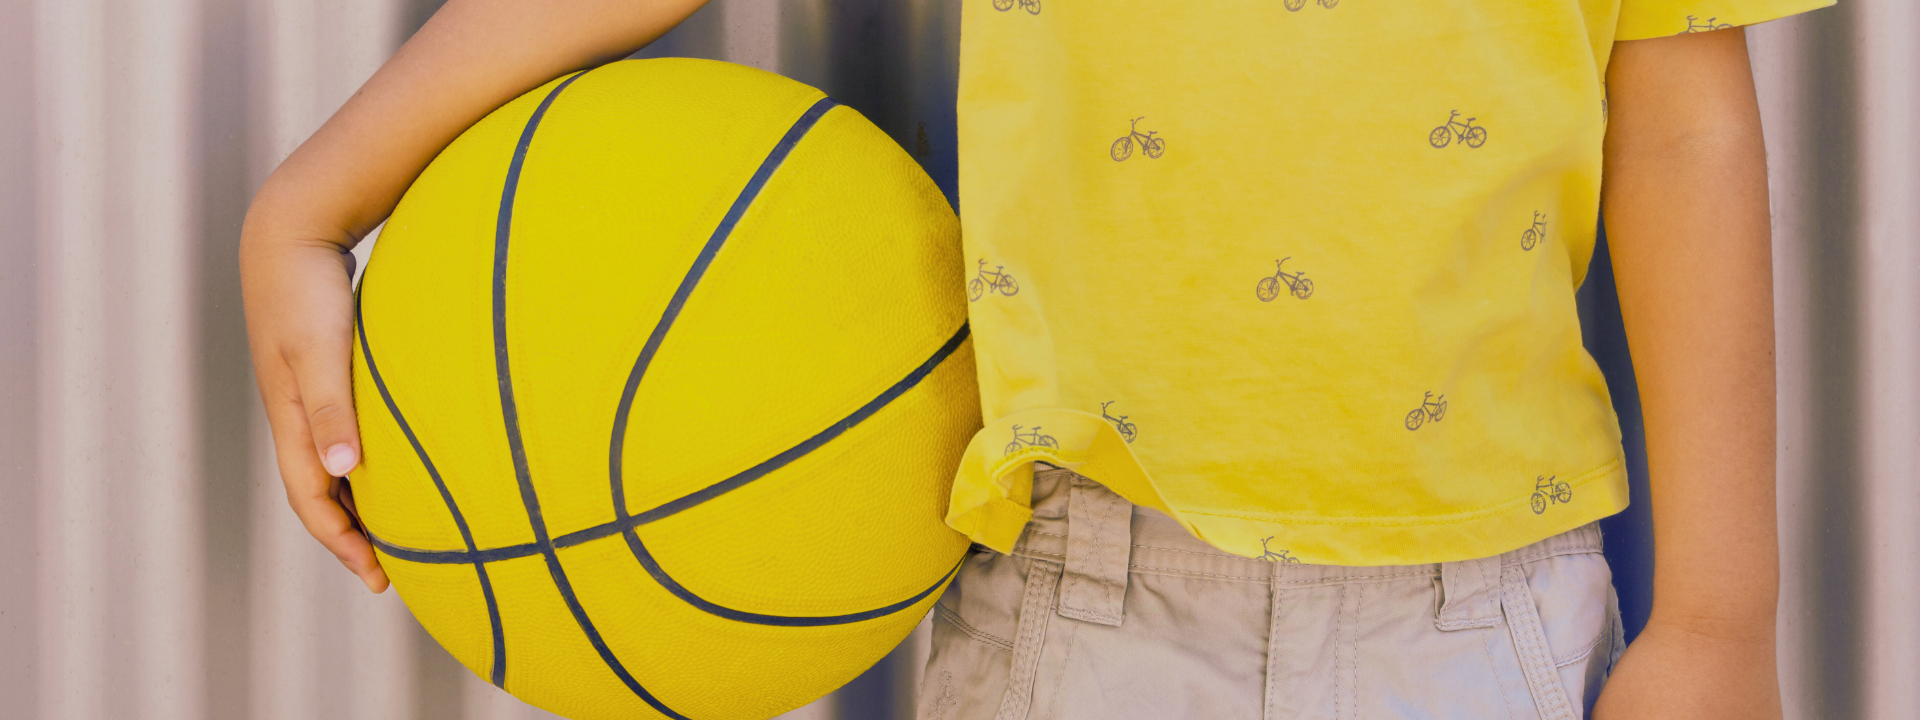 yellow basketball